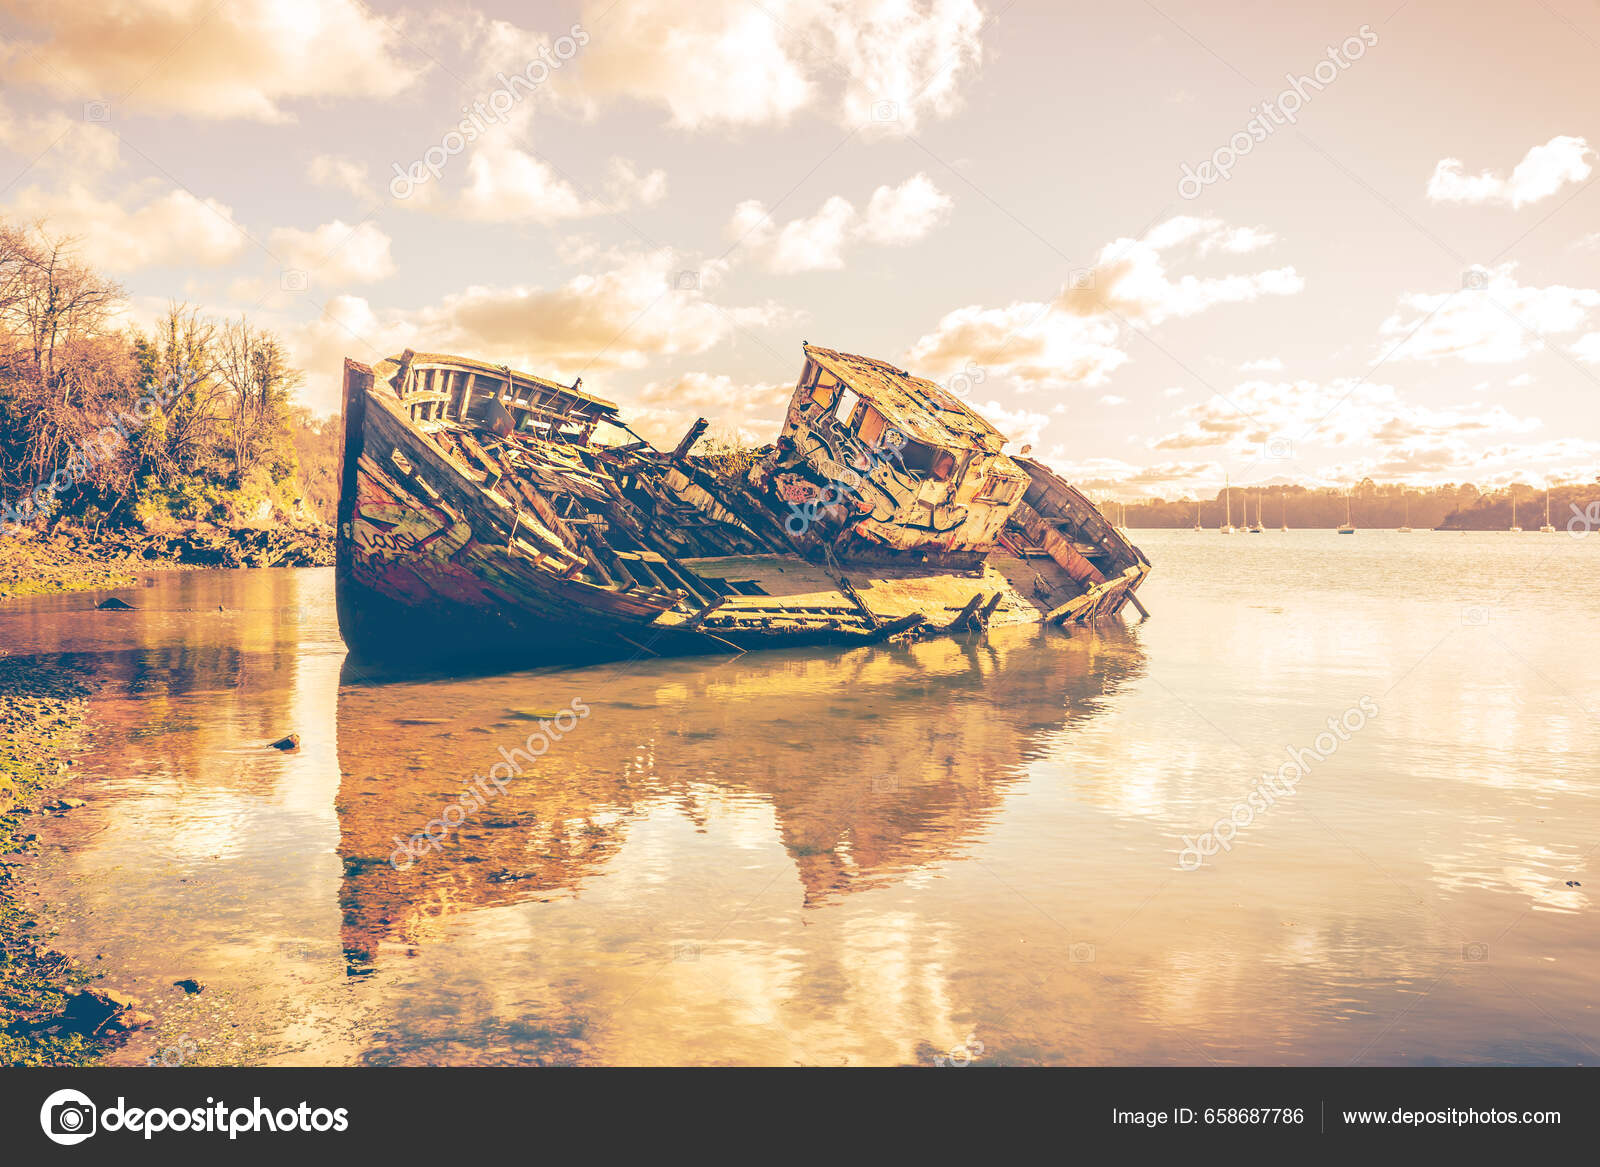 https://st5.depositphotos.com/1011415/65868/i/1600/depositphotos_658687786-stock-photo-wreck-wooden-fishing-boat-abandonedon.jpg